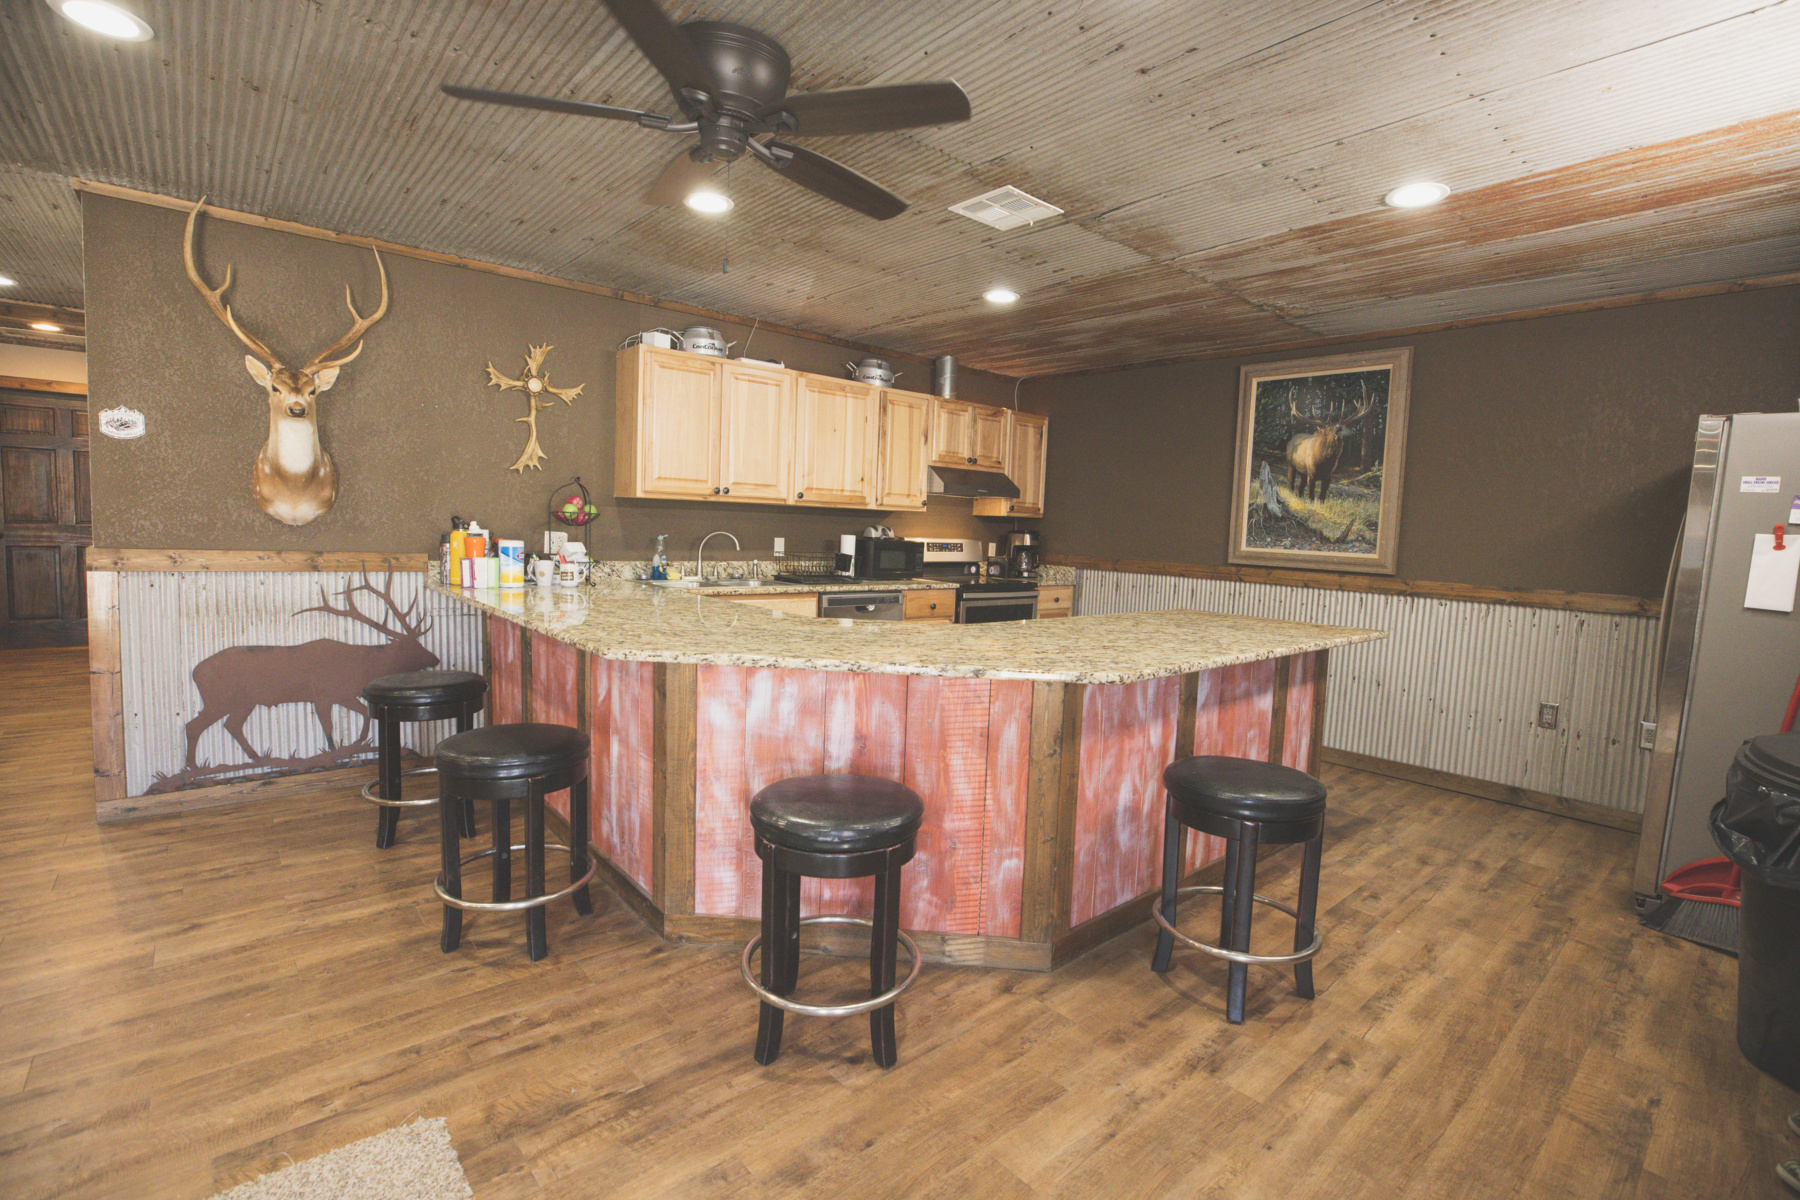 Kansas hunting lodge has 9 bedrooms!